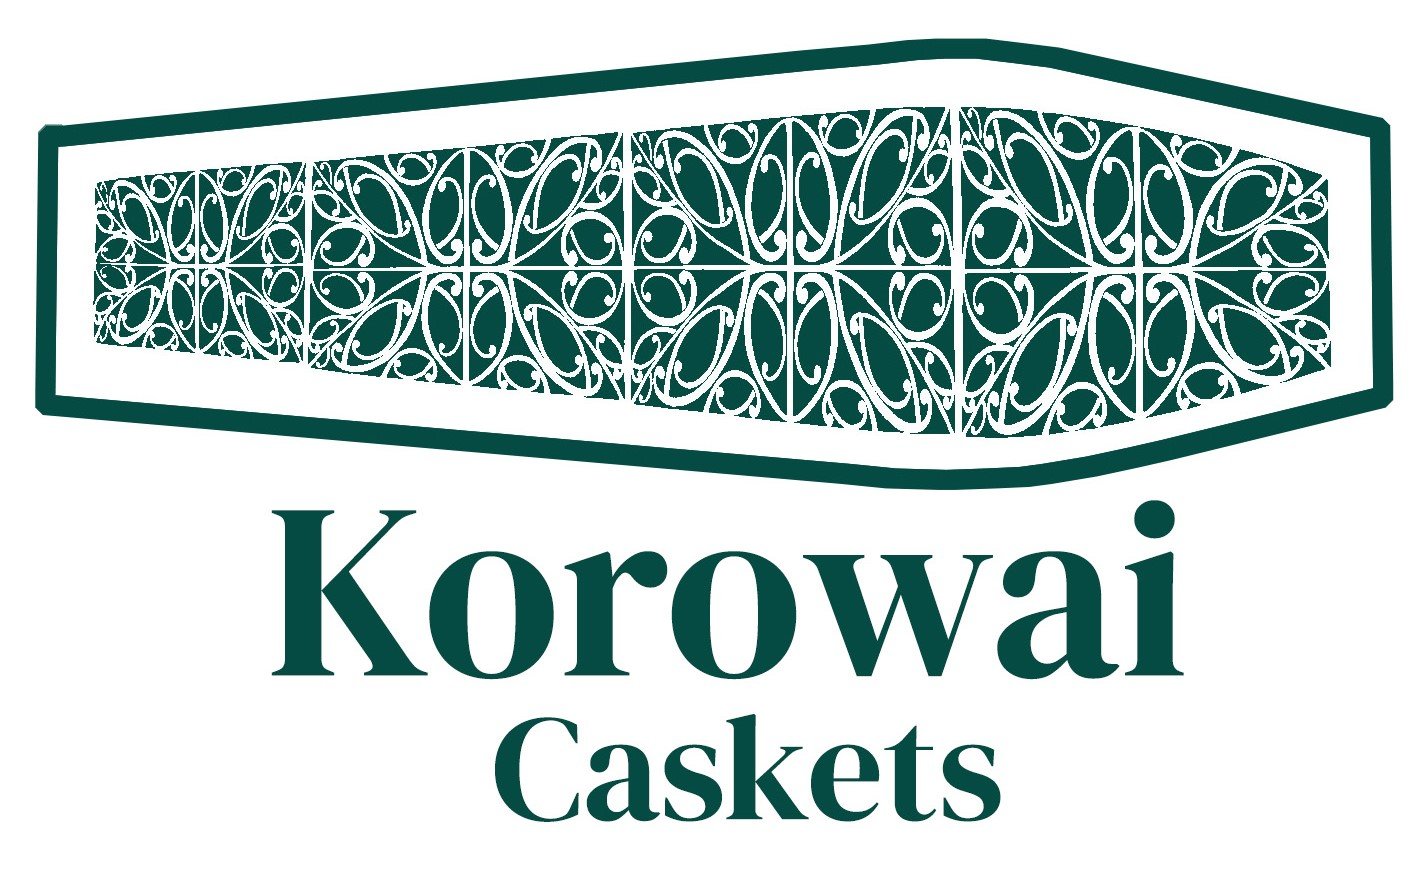 Korowai Caskets Eco-friendly Caskets